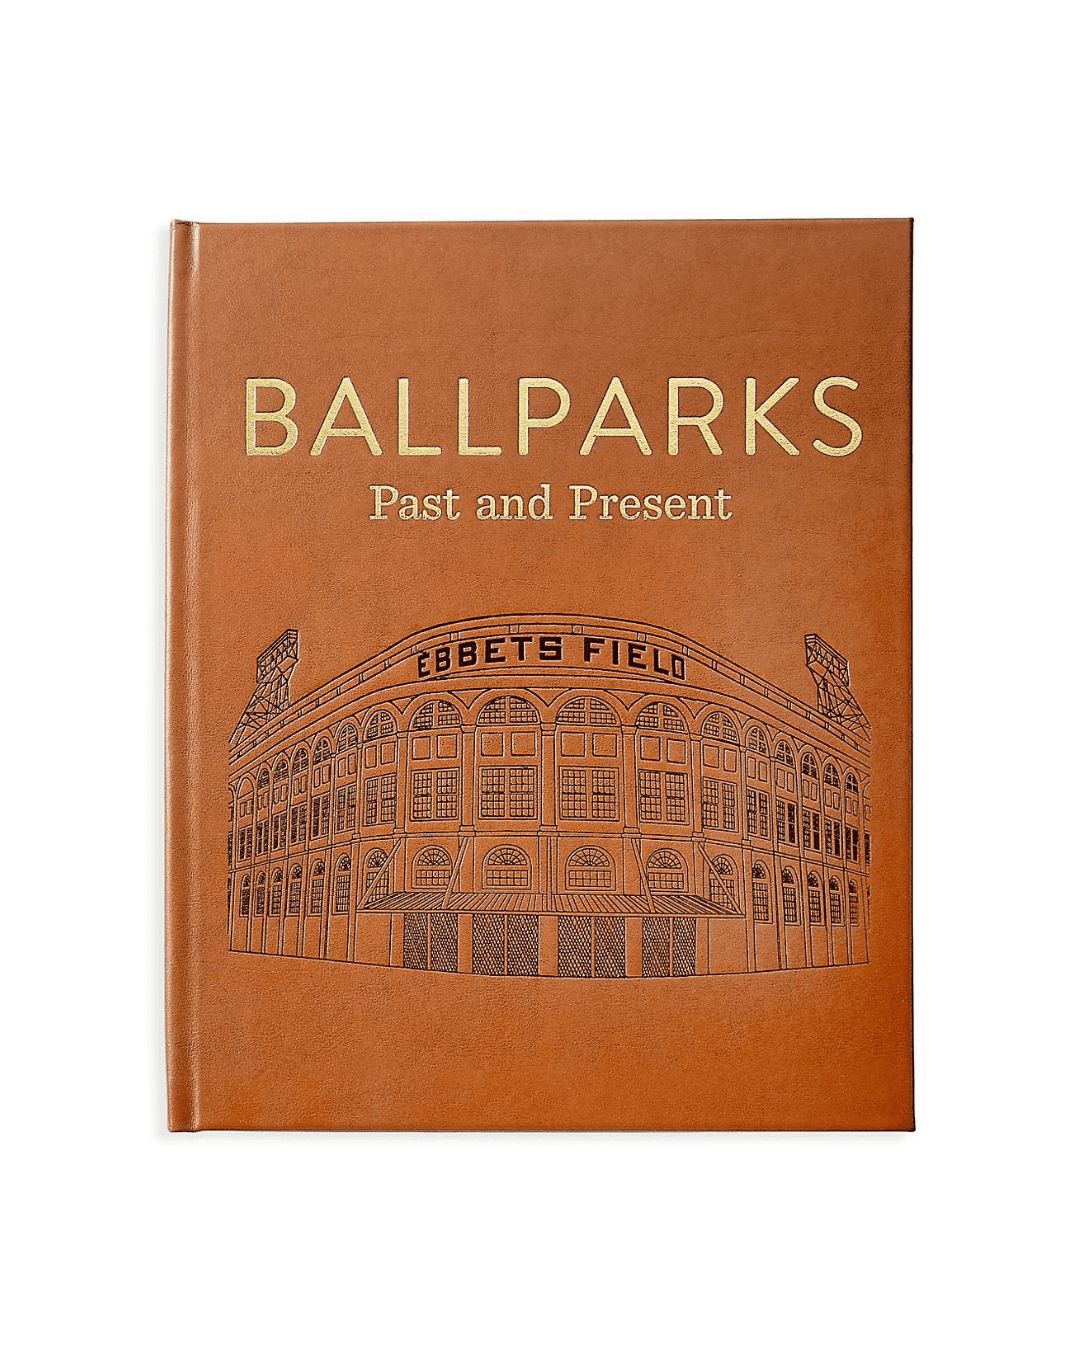 Ballparks: Past & Present